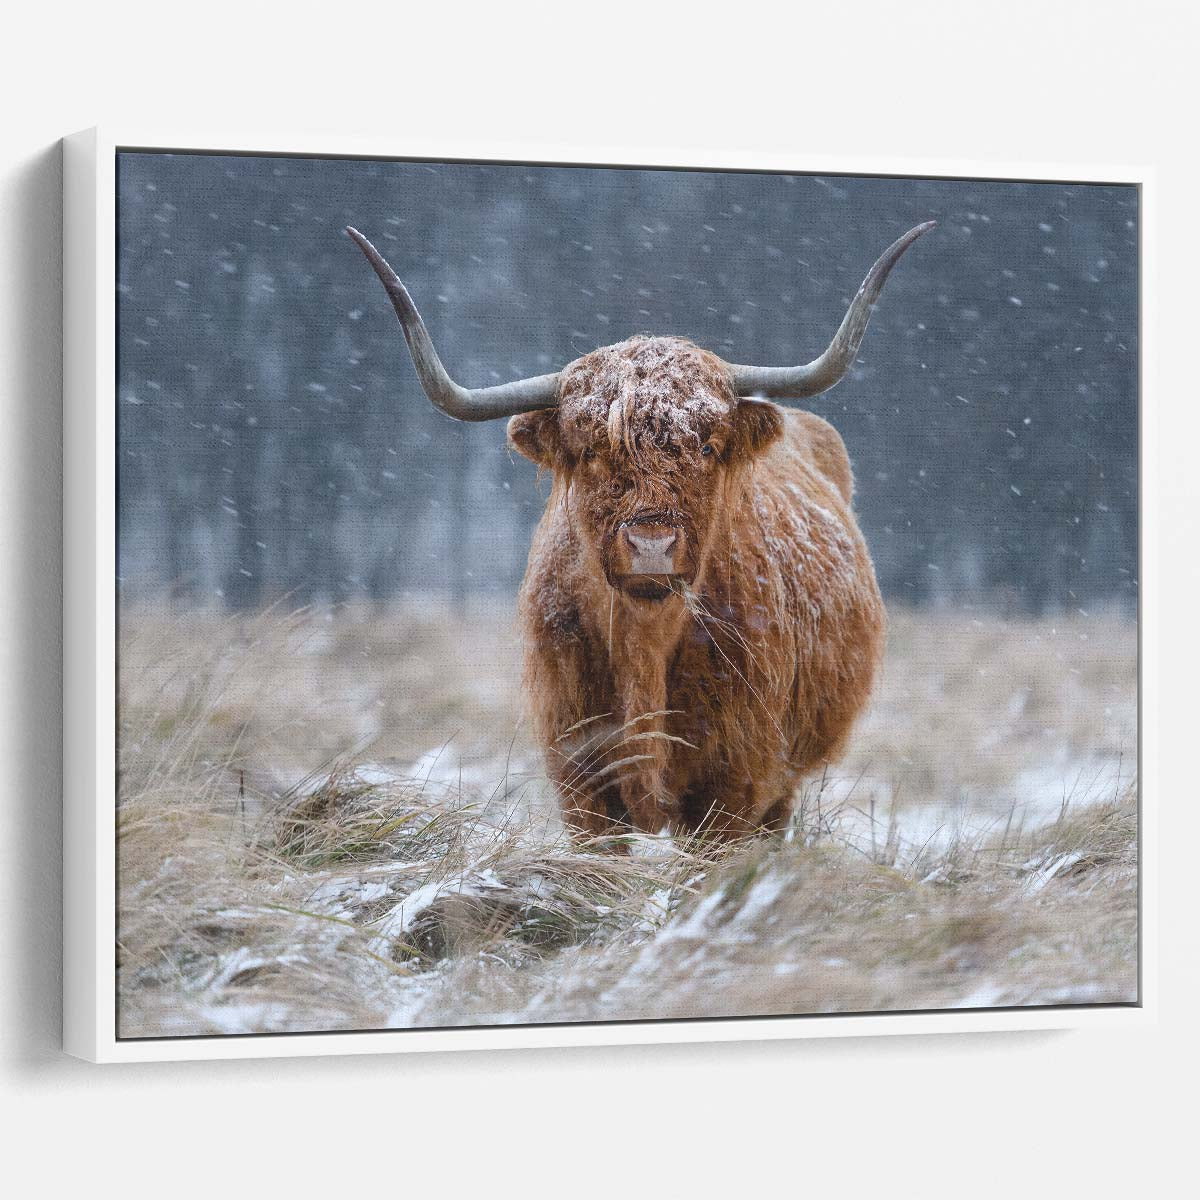 Winter Highland Cow Portrait in Snowy Dutch Countryside Wall Art